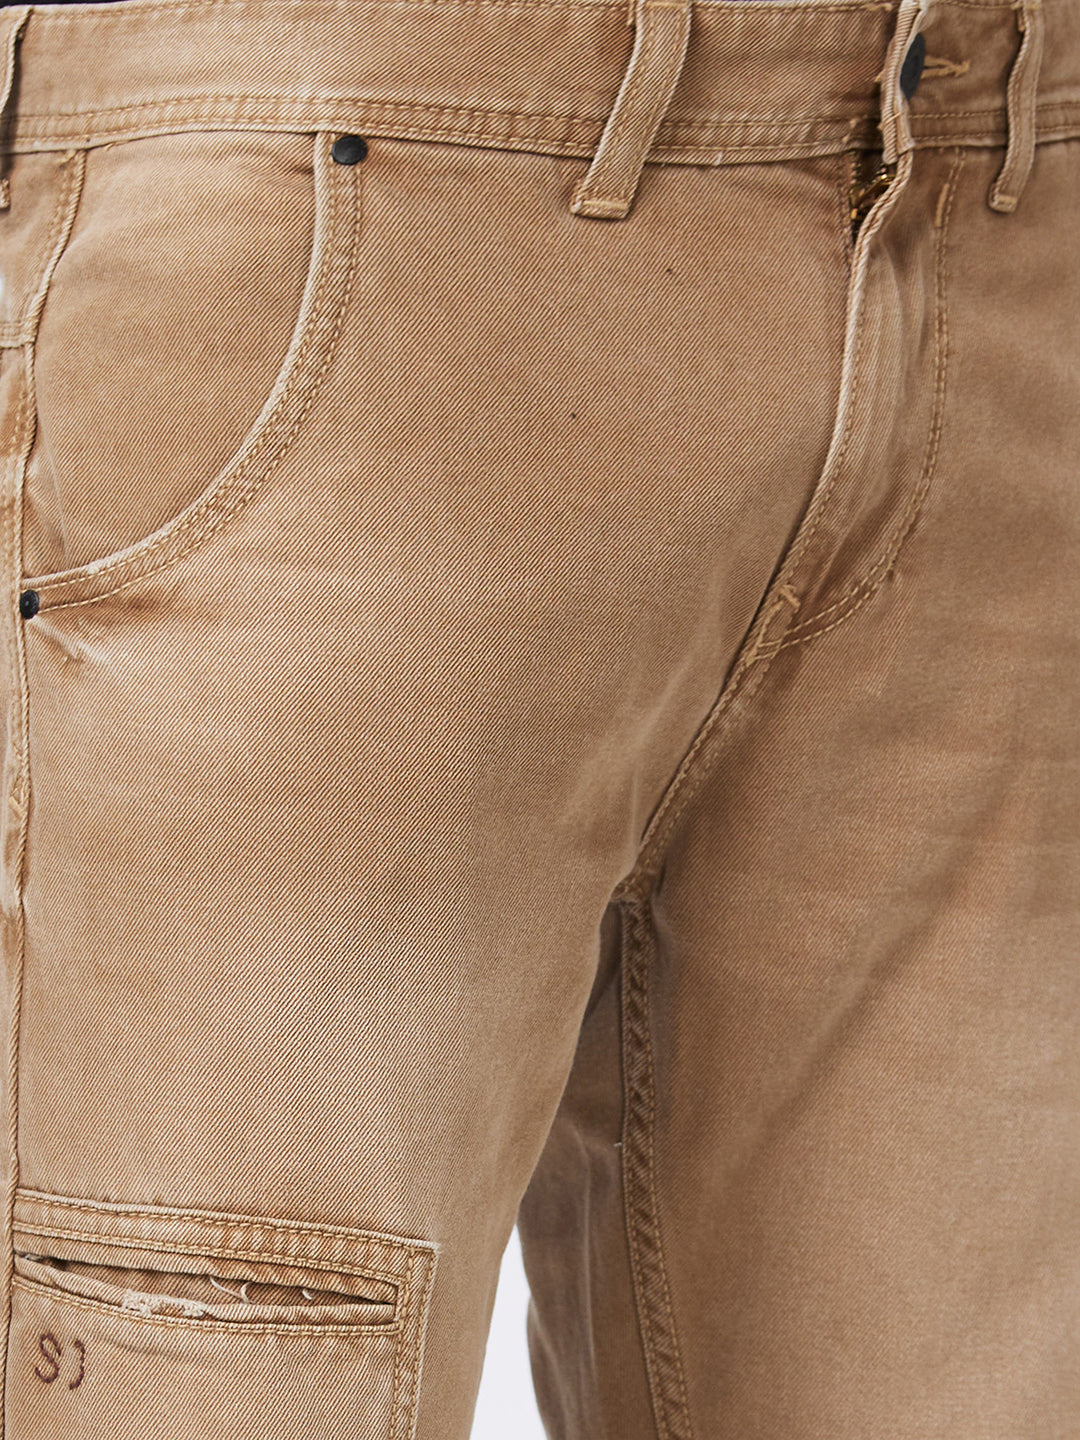 Spykar High Rise Comfort Fit Narrow Length Khaki Jeans For Men